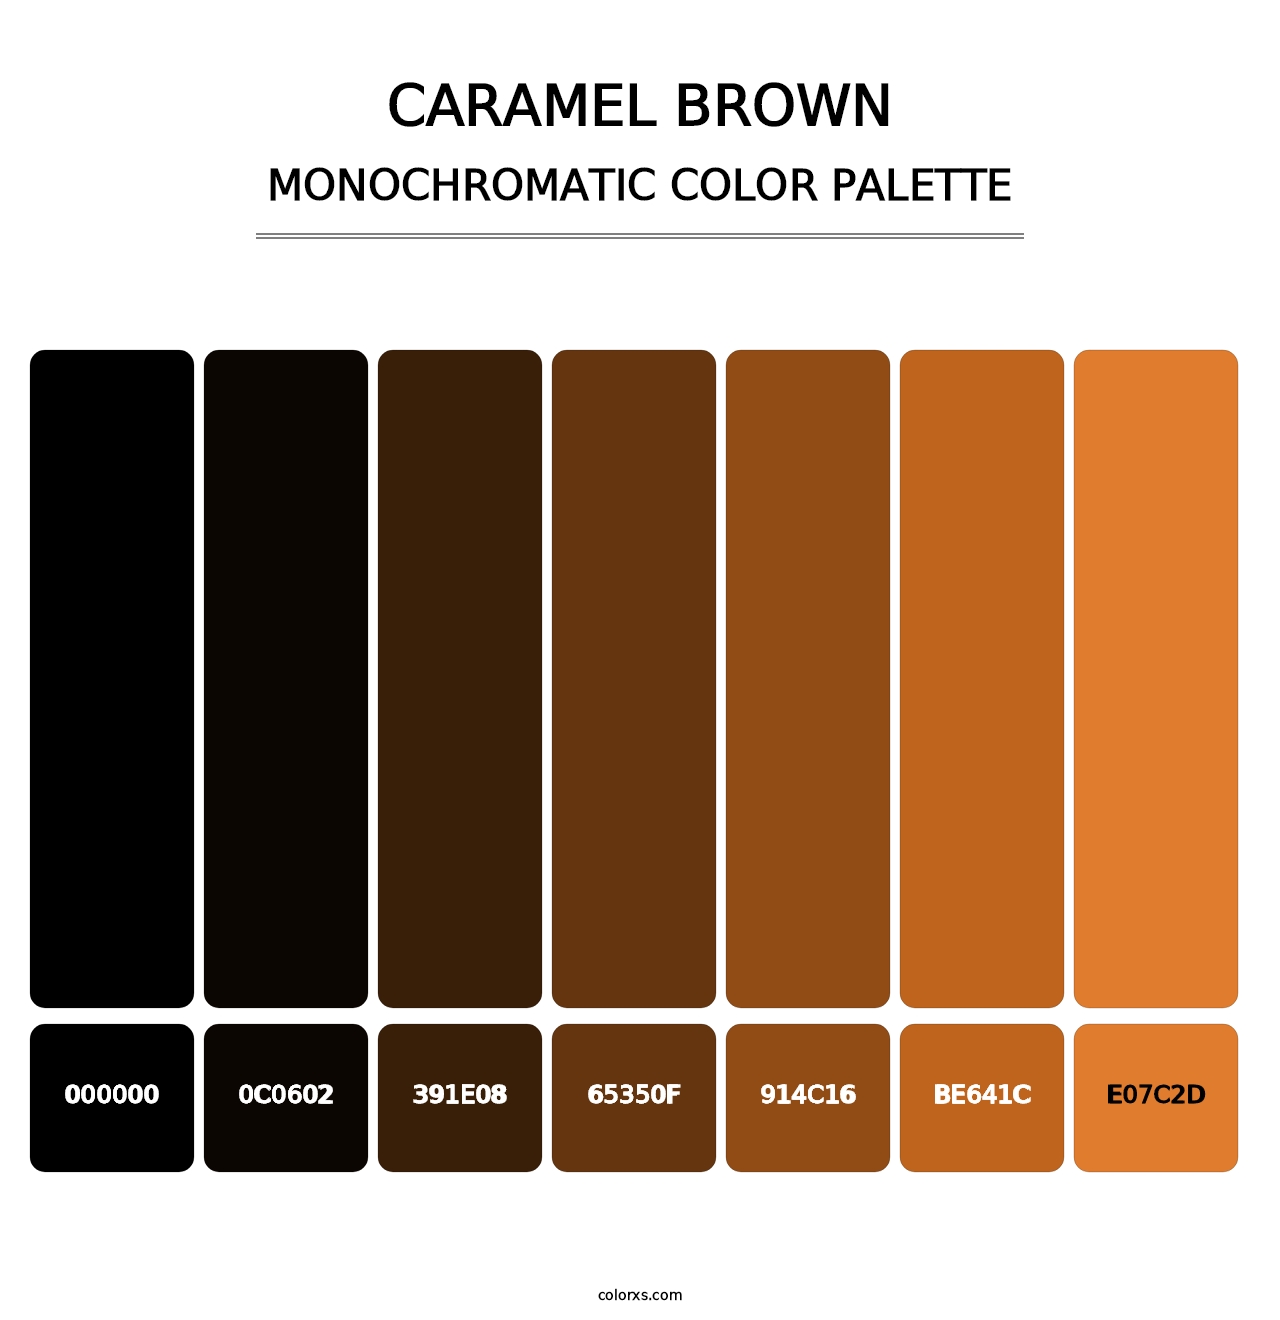 Caramel Brown - Monochromatic Color Palette